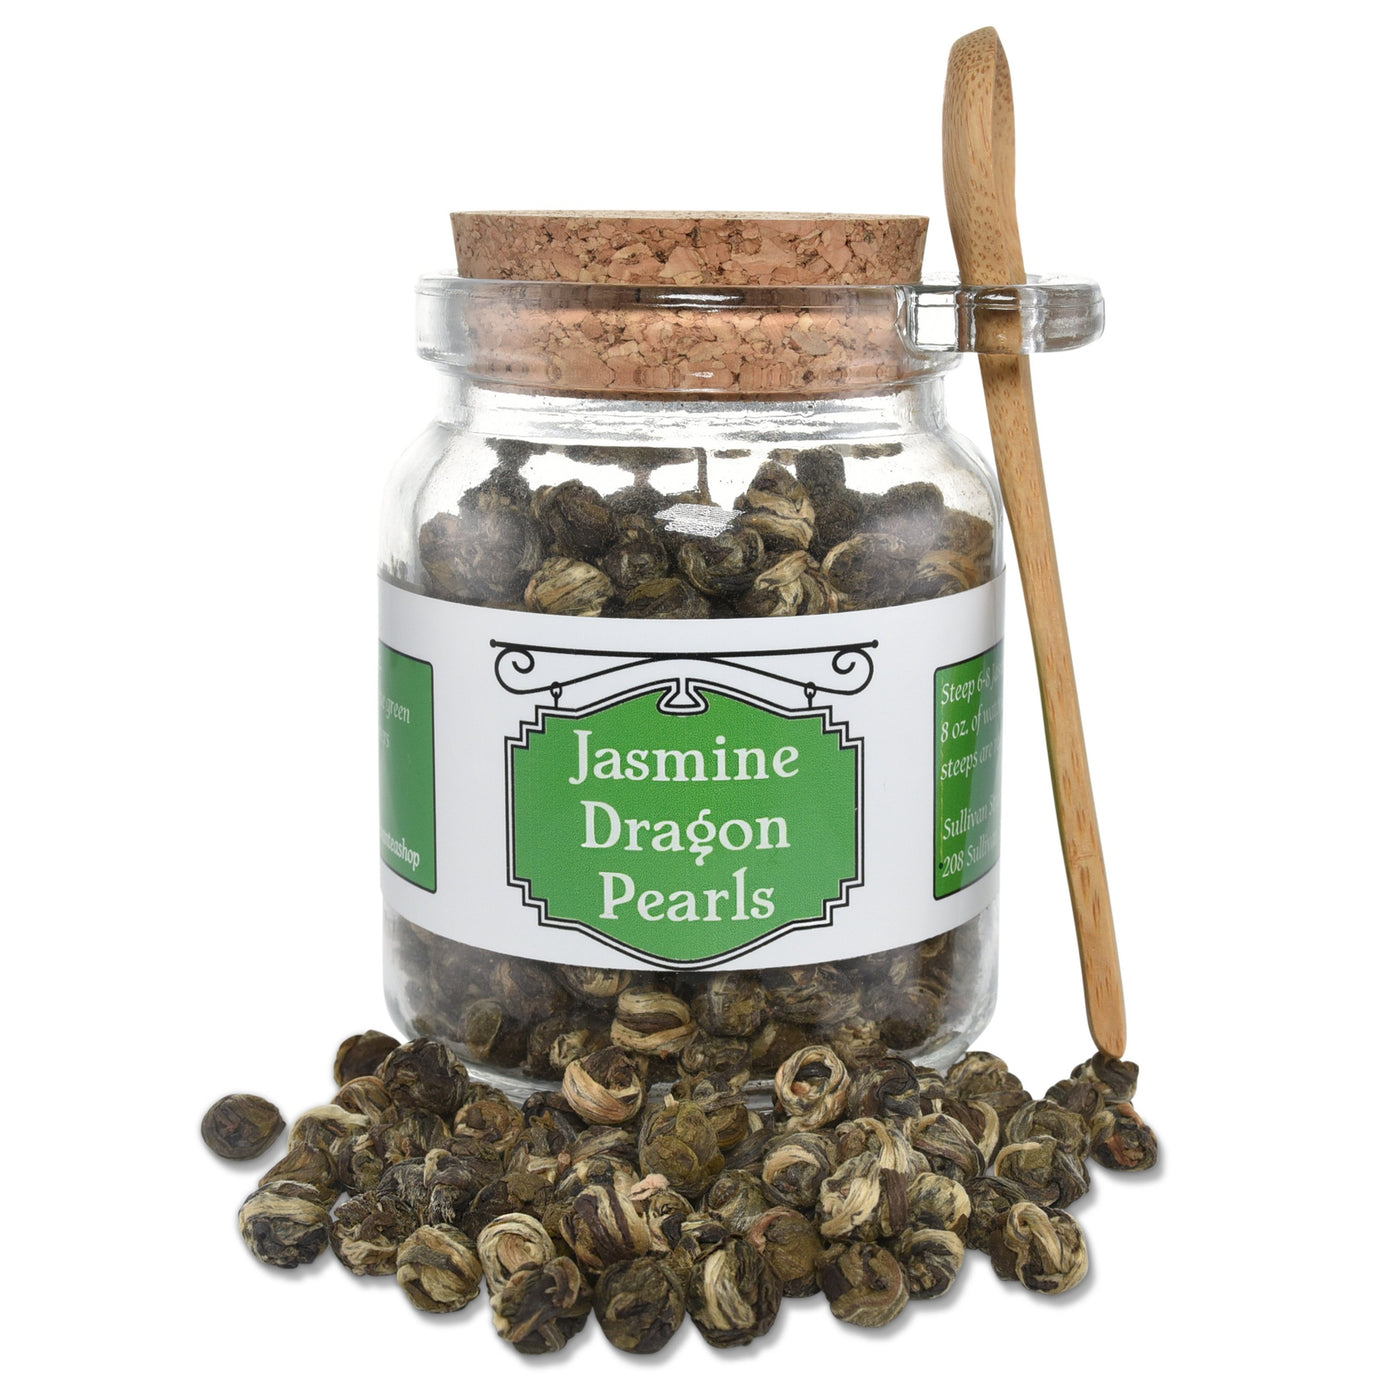 Jasmine Dragon Pearls Gift Jar - Sullivan Street Tea & Spice Company